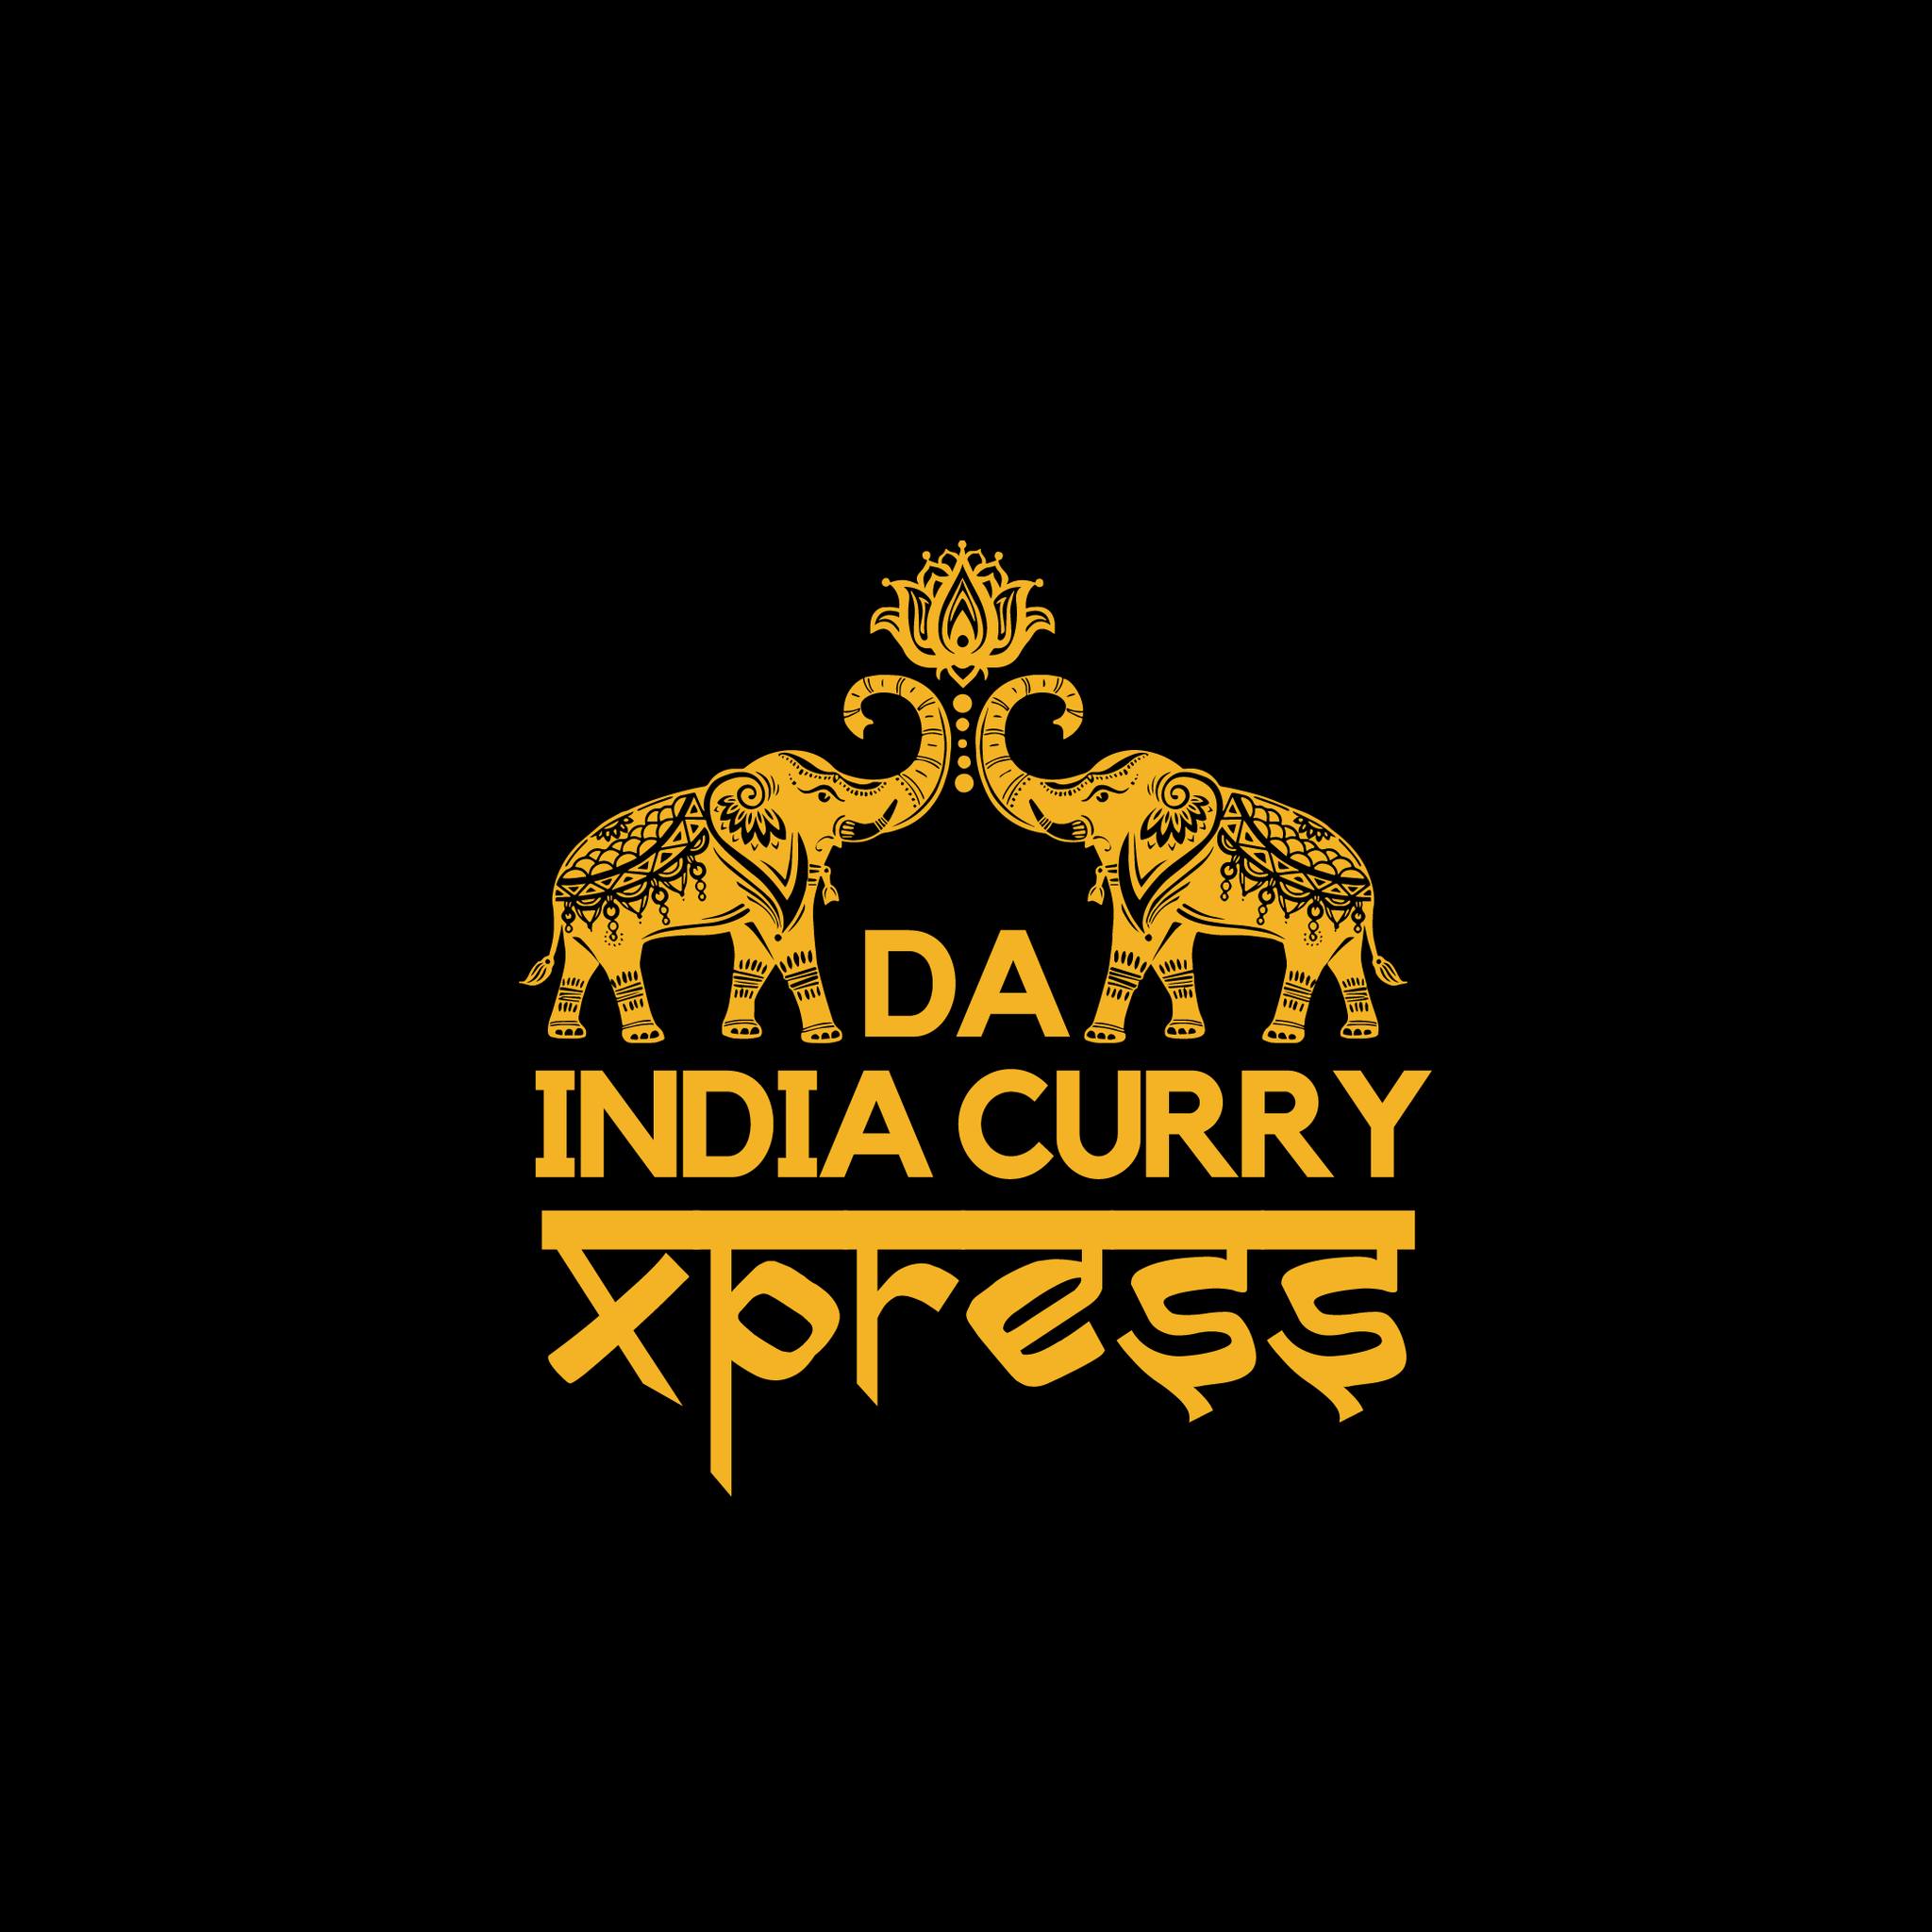 Da India Curry Xpress Logo